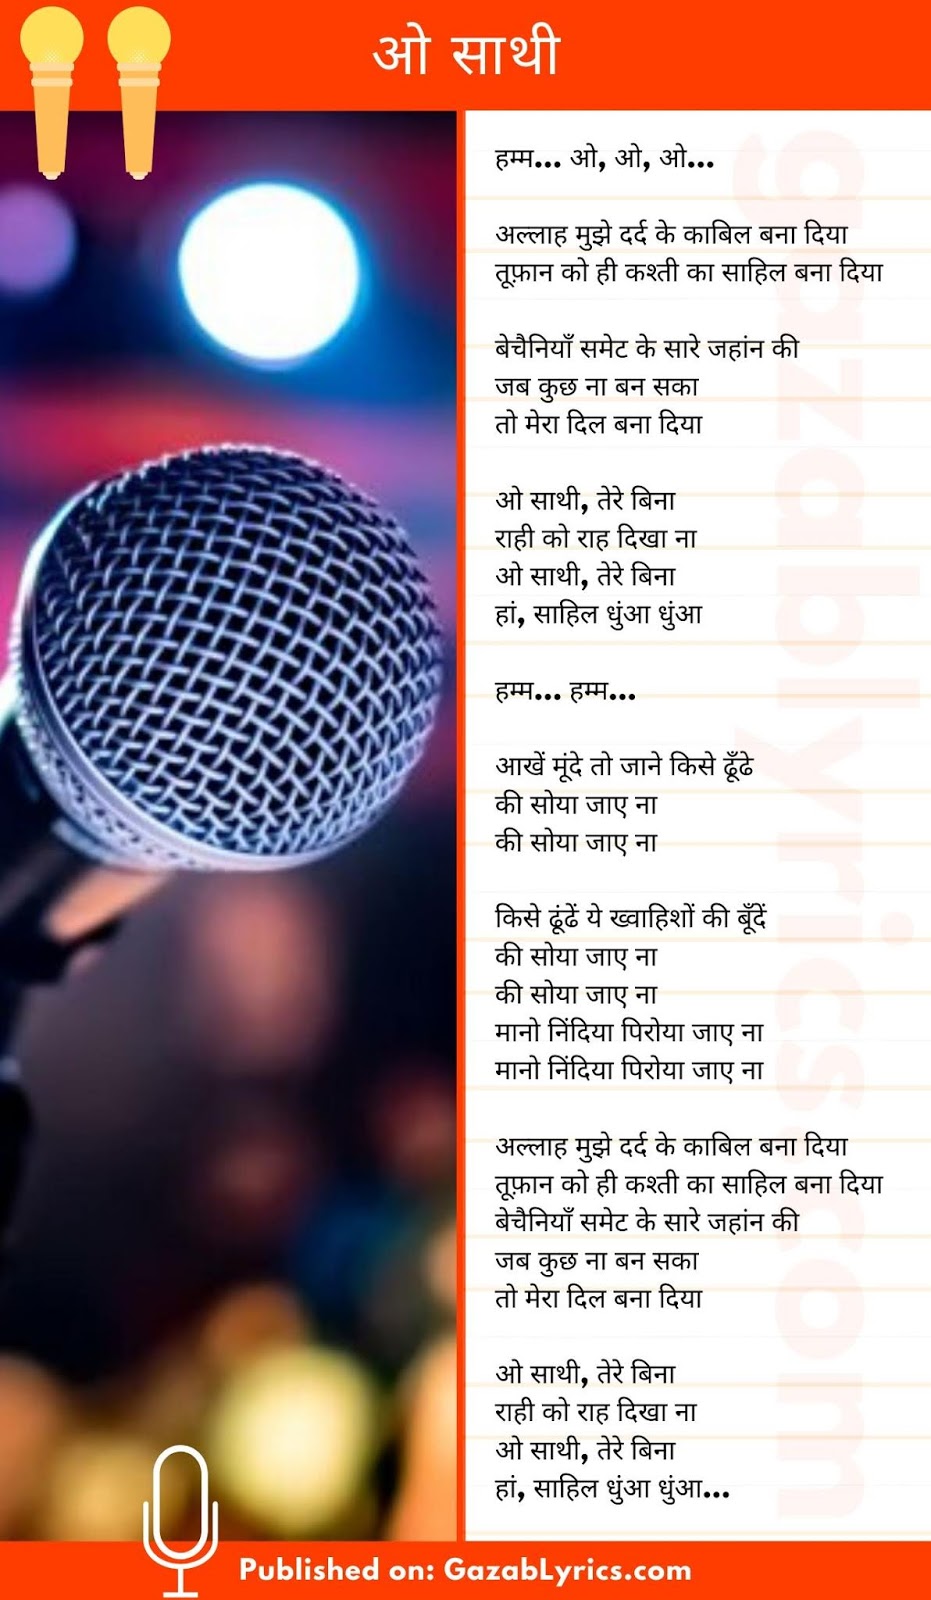 O Saathi song lyrics image